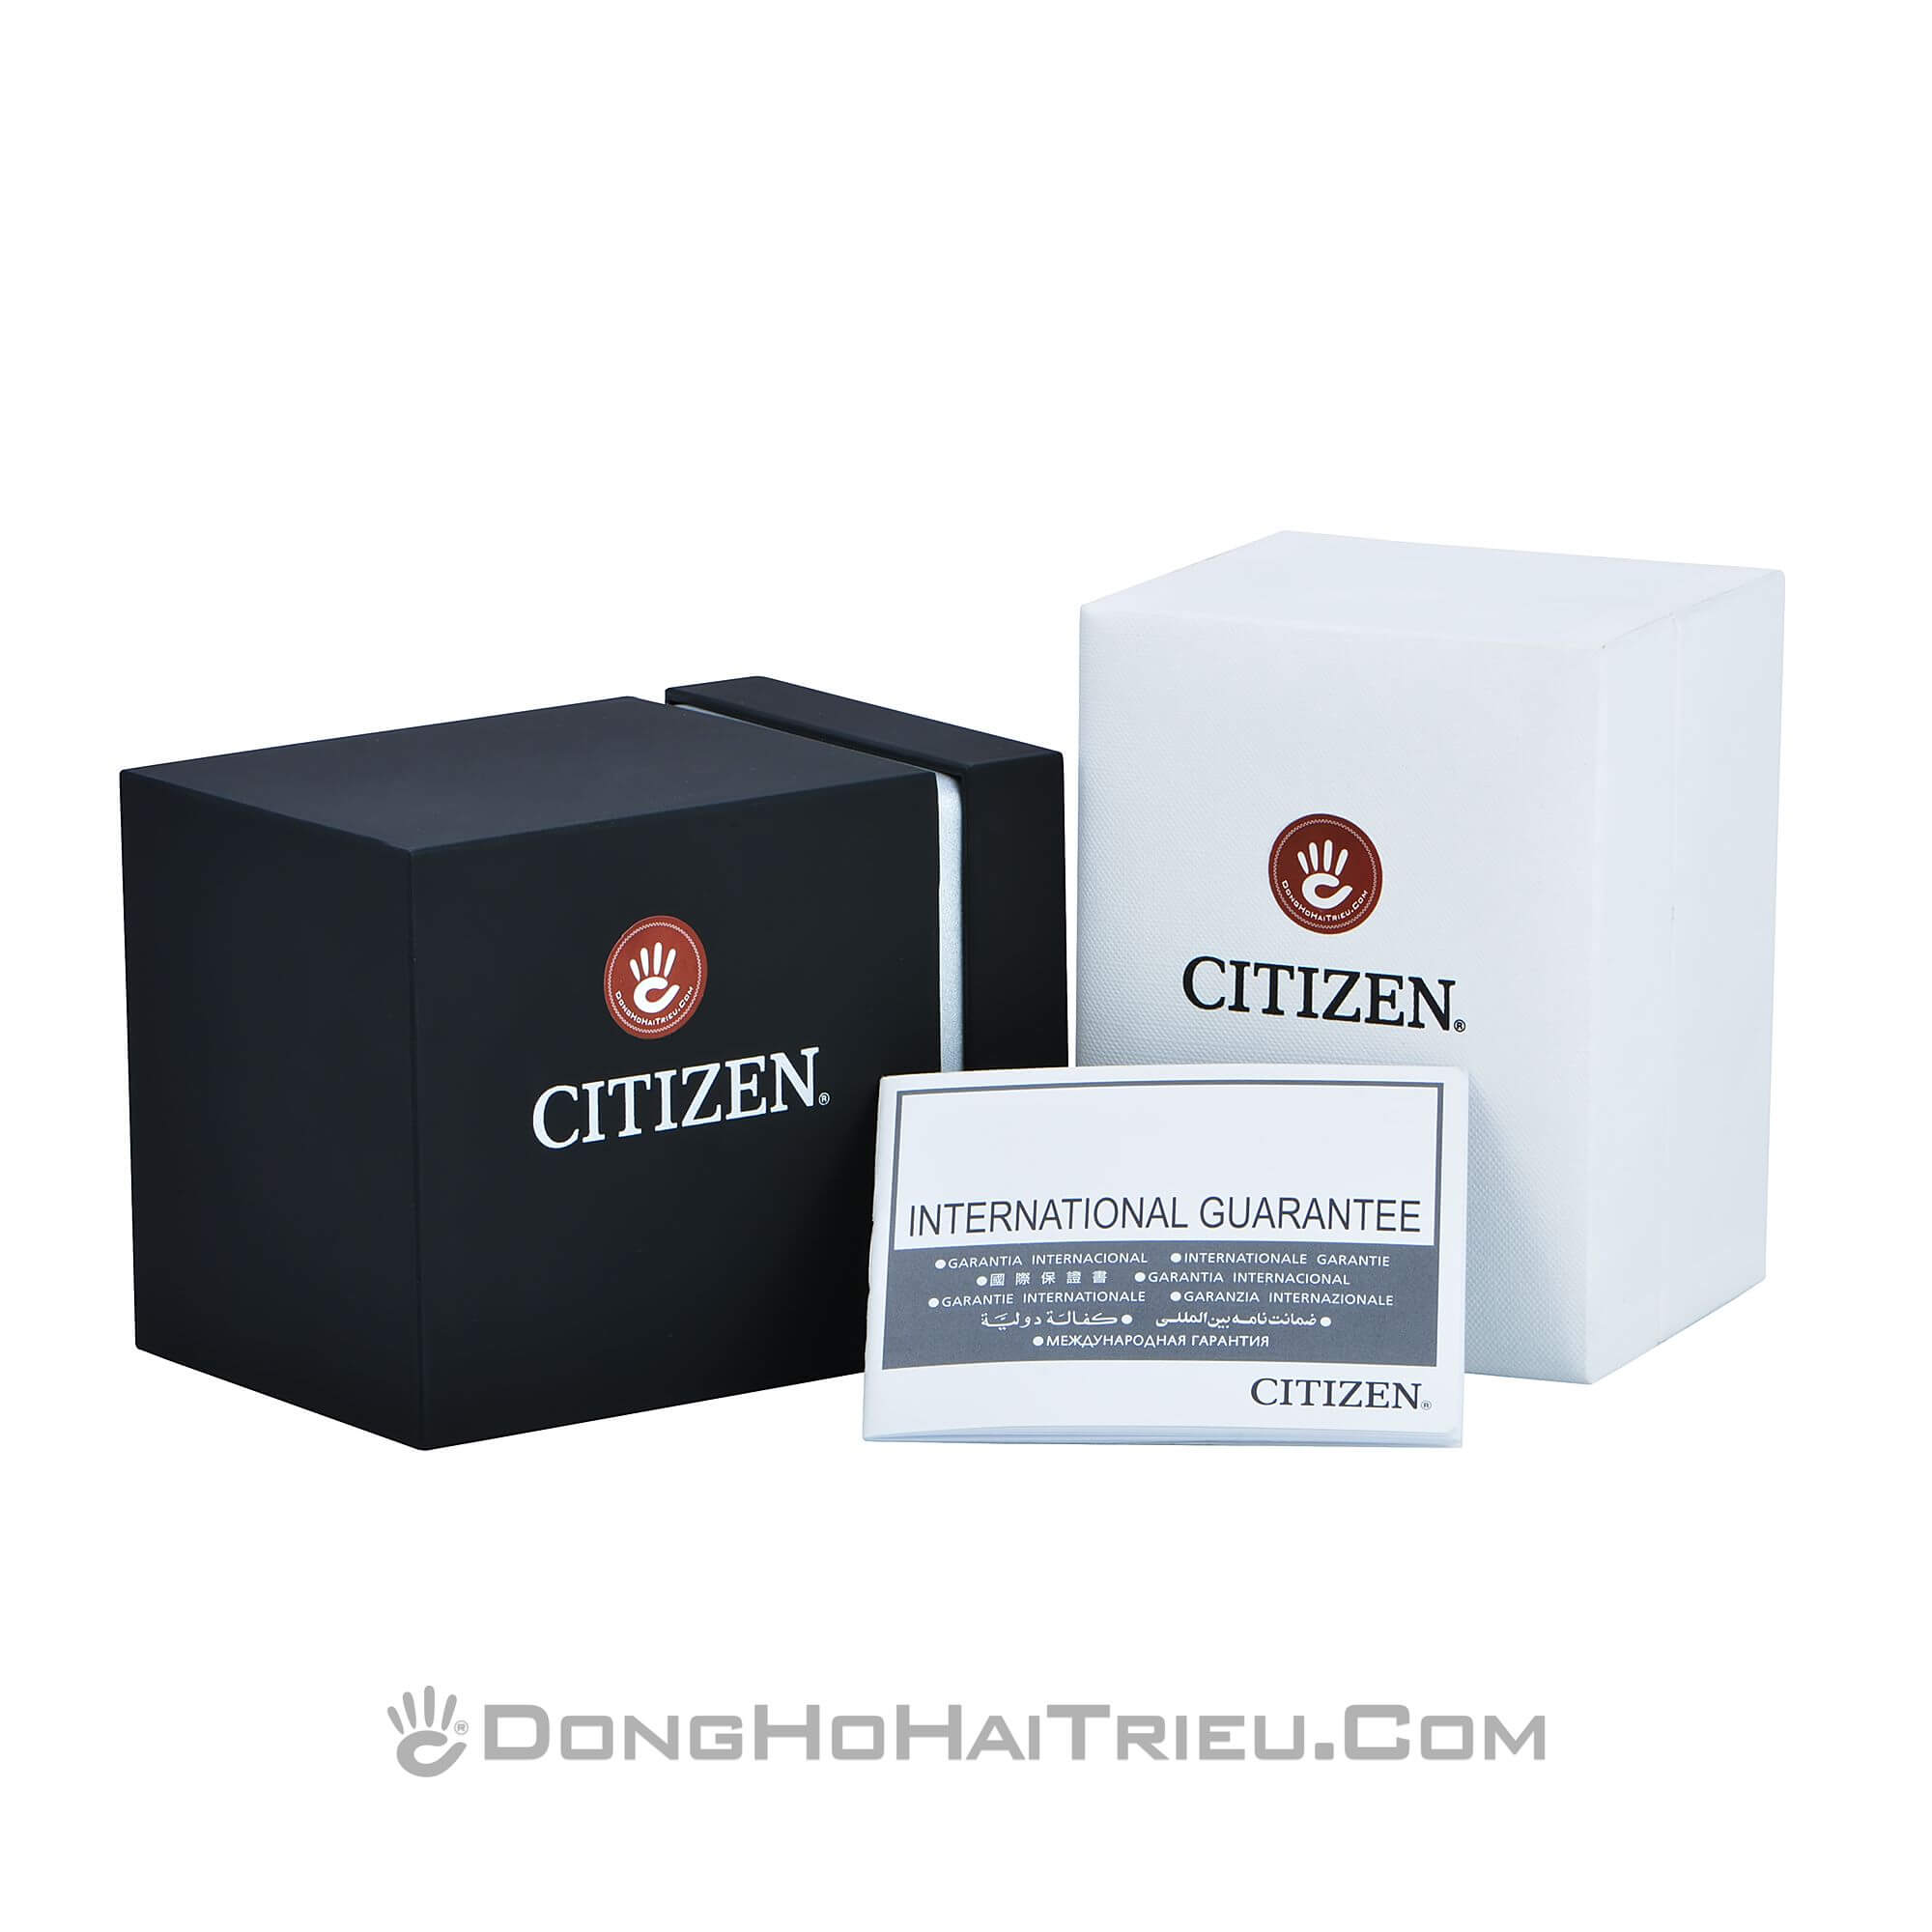 Citizen-Box1 (1)